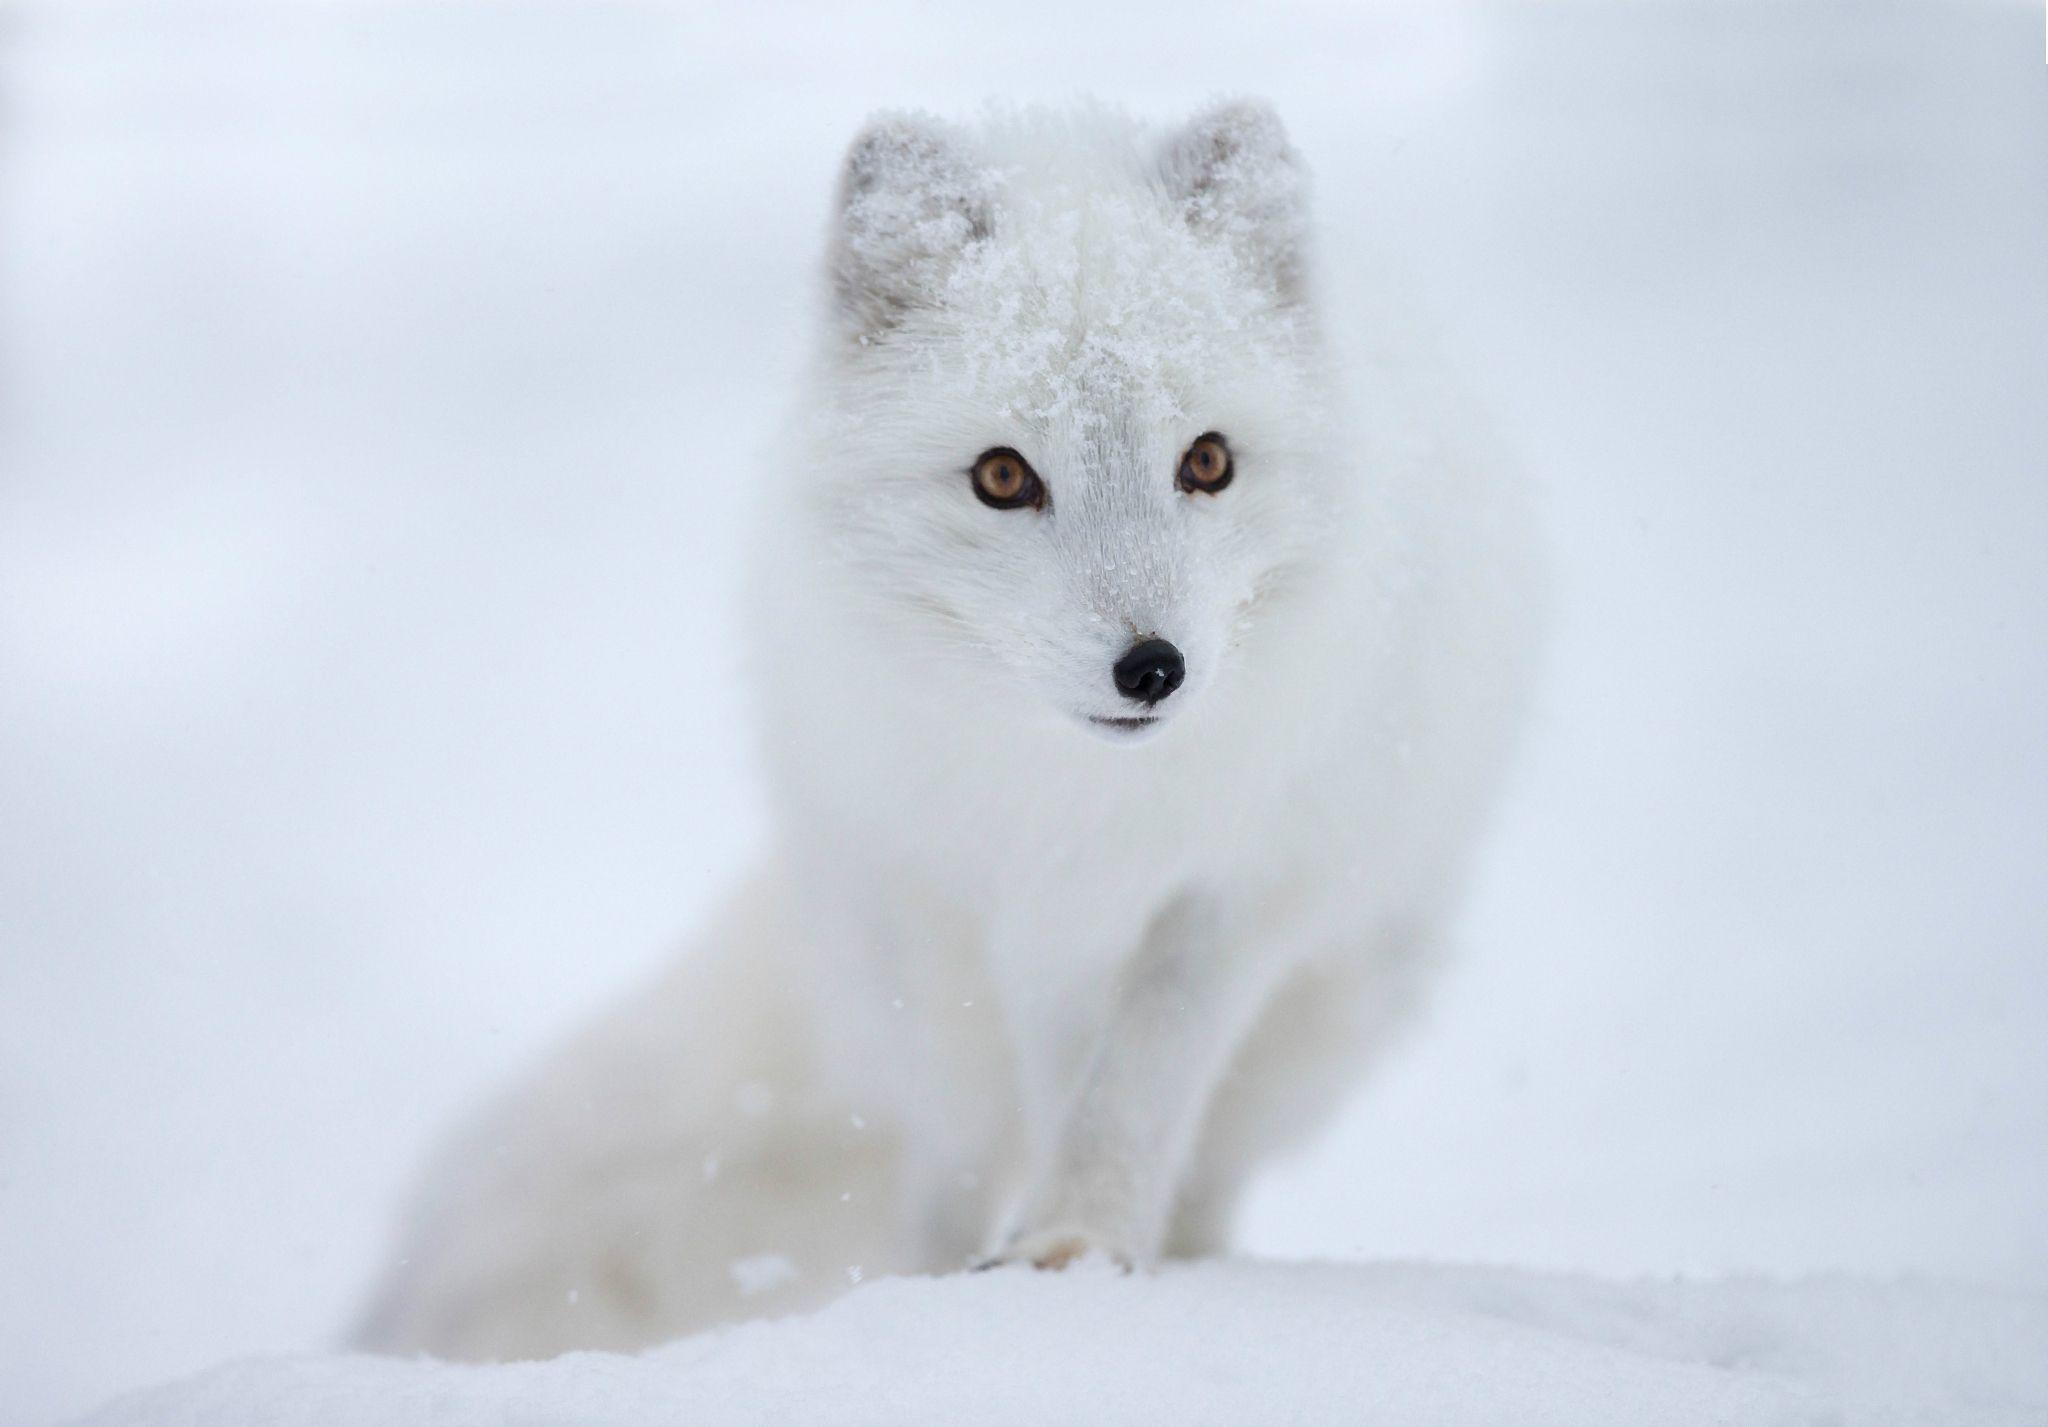 Snow, eyes, Fox, Arctic Fox wallpaper and image